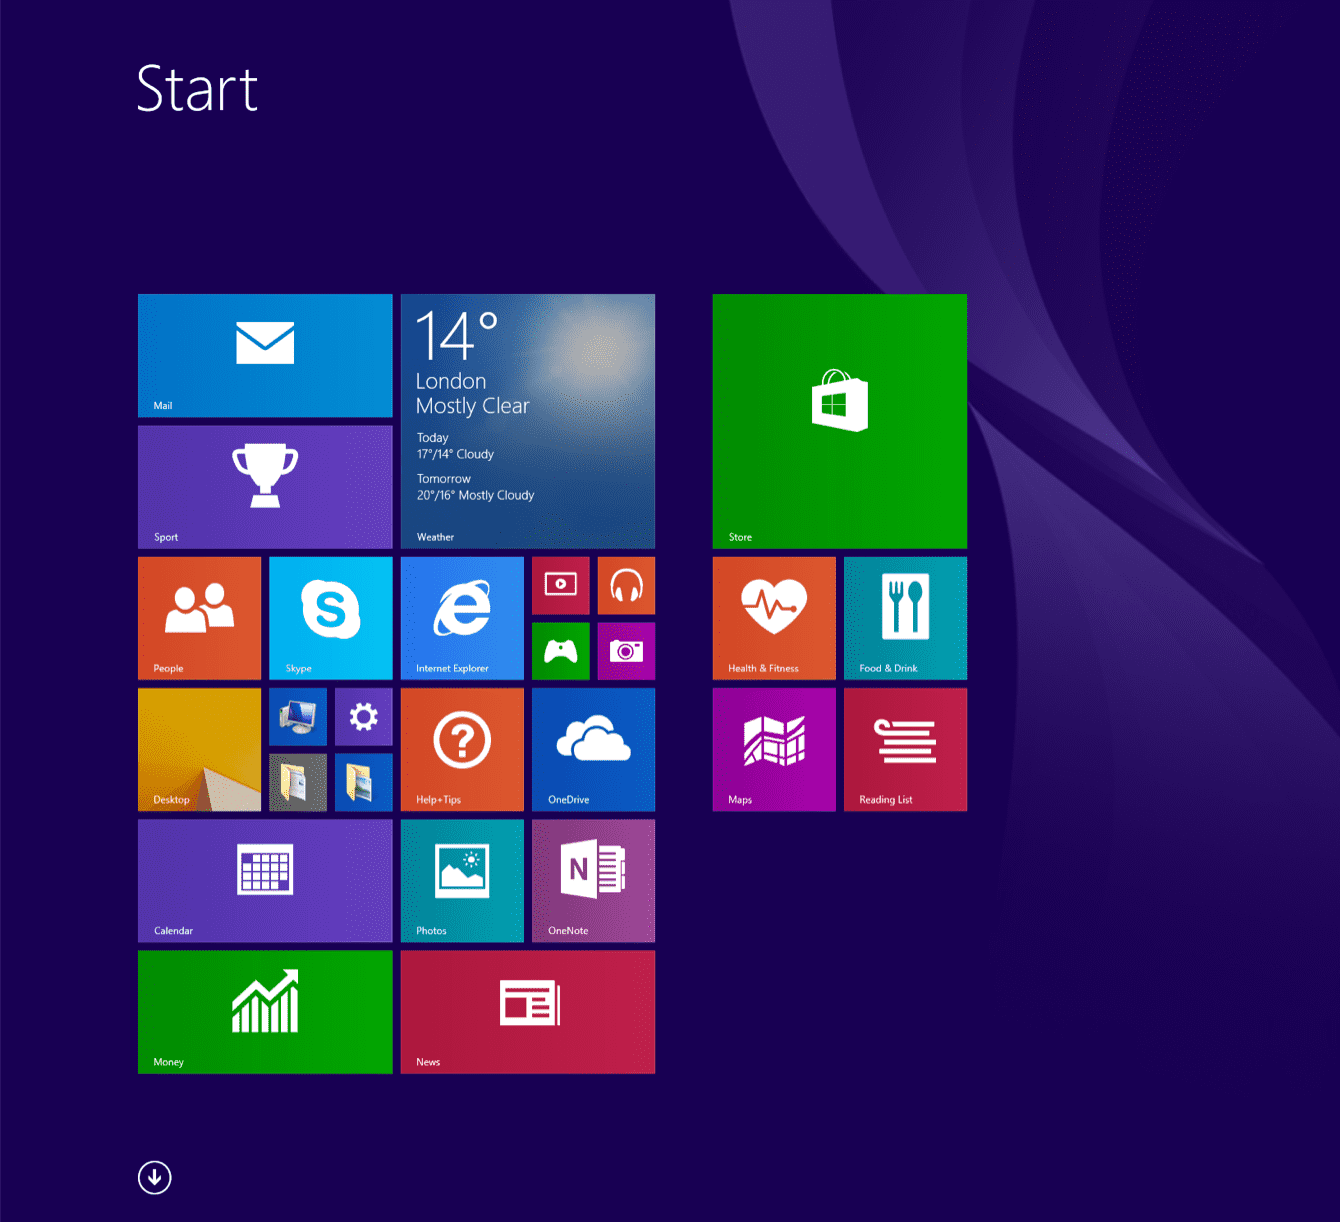 Windows 8.1 “Start” menu.